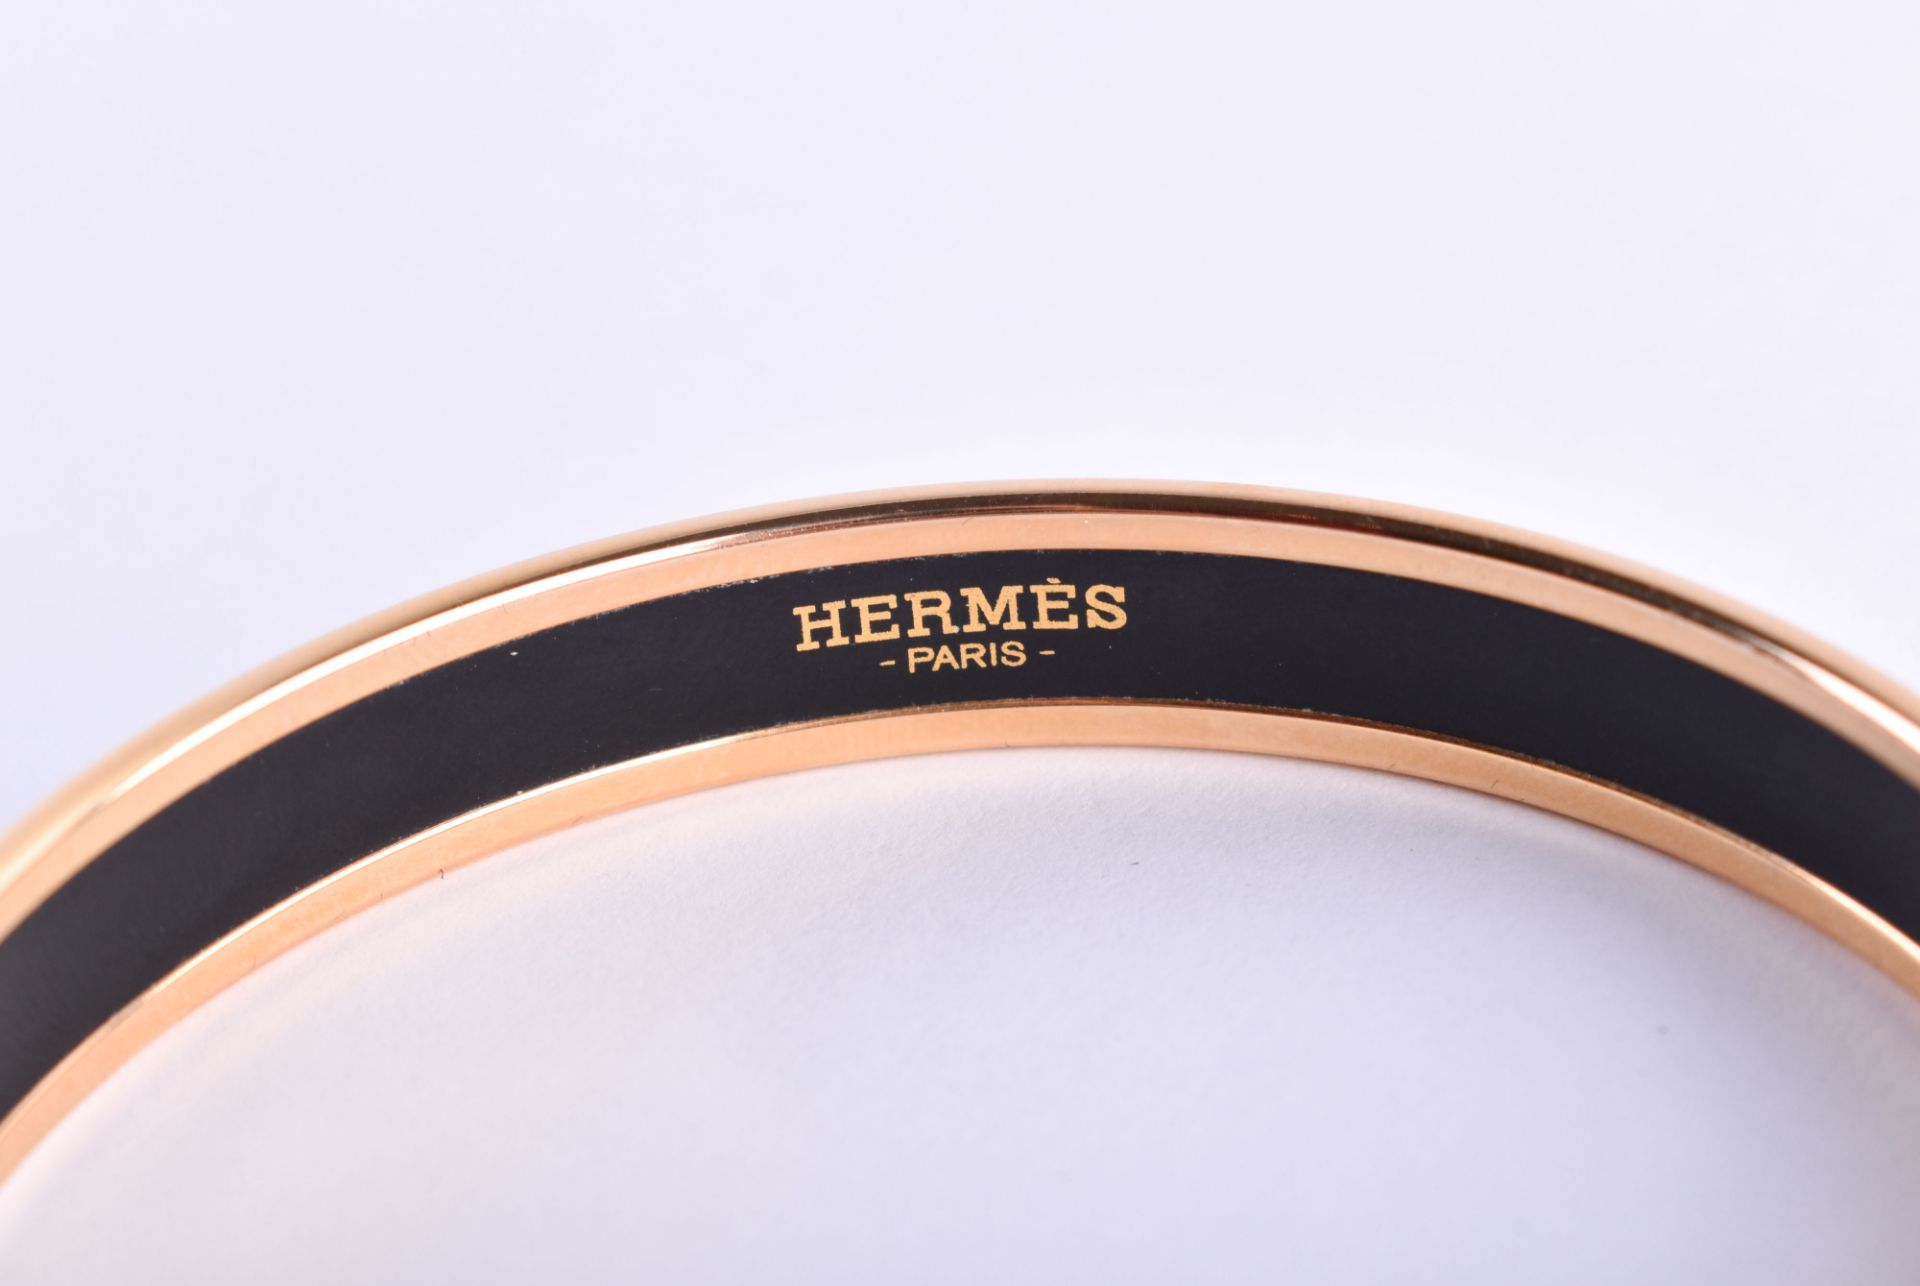  Vintage enamel bangle Hermes Paris - Image 4 of 6